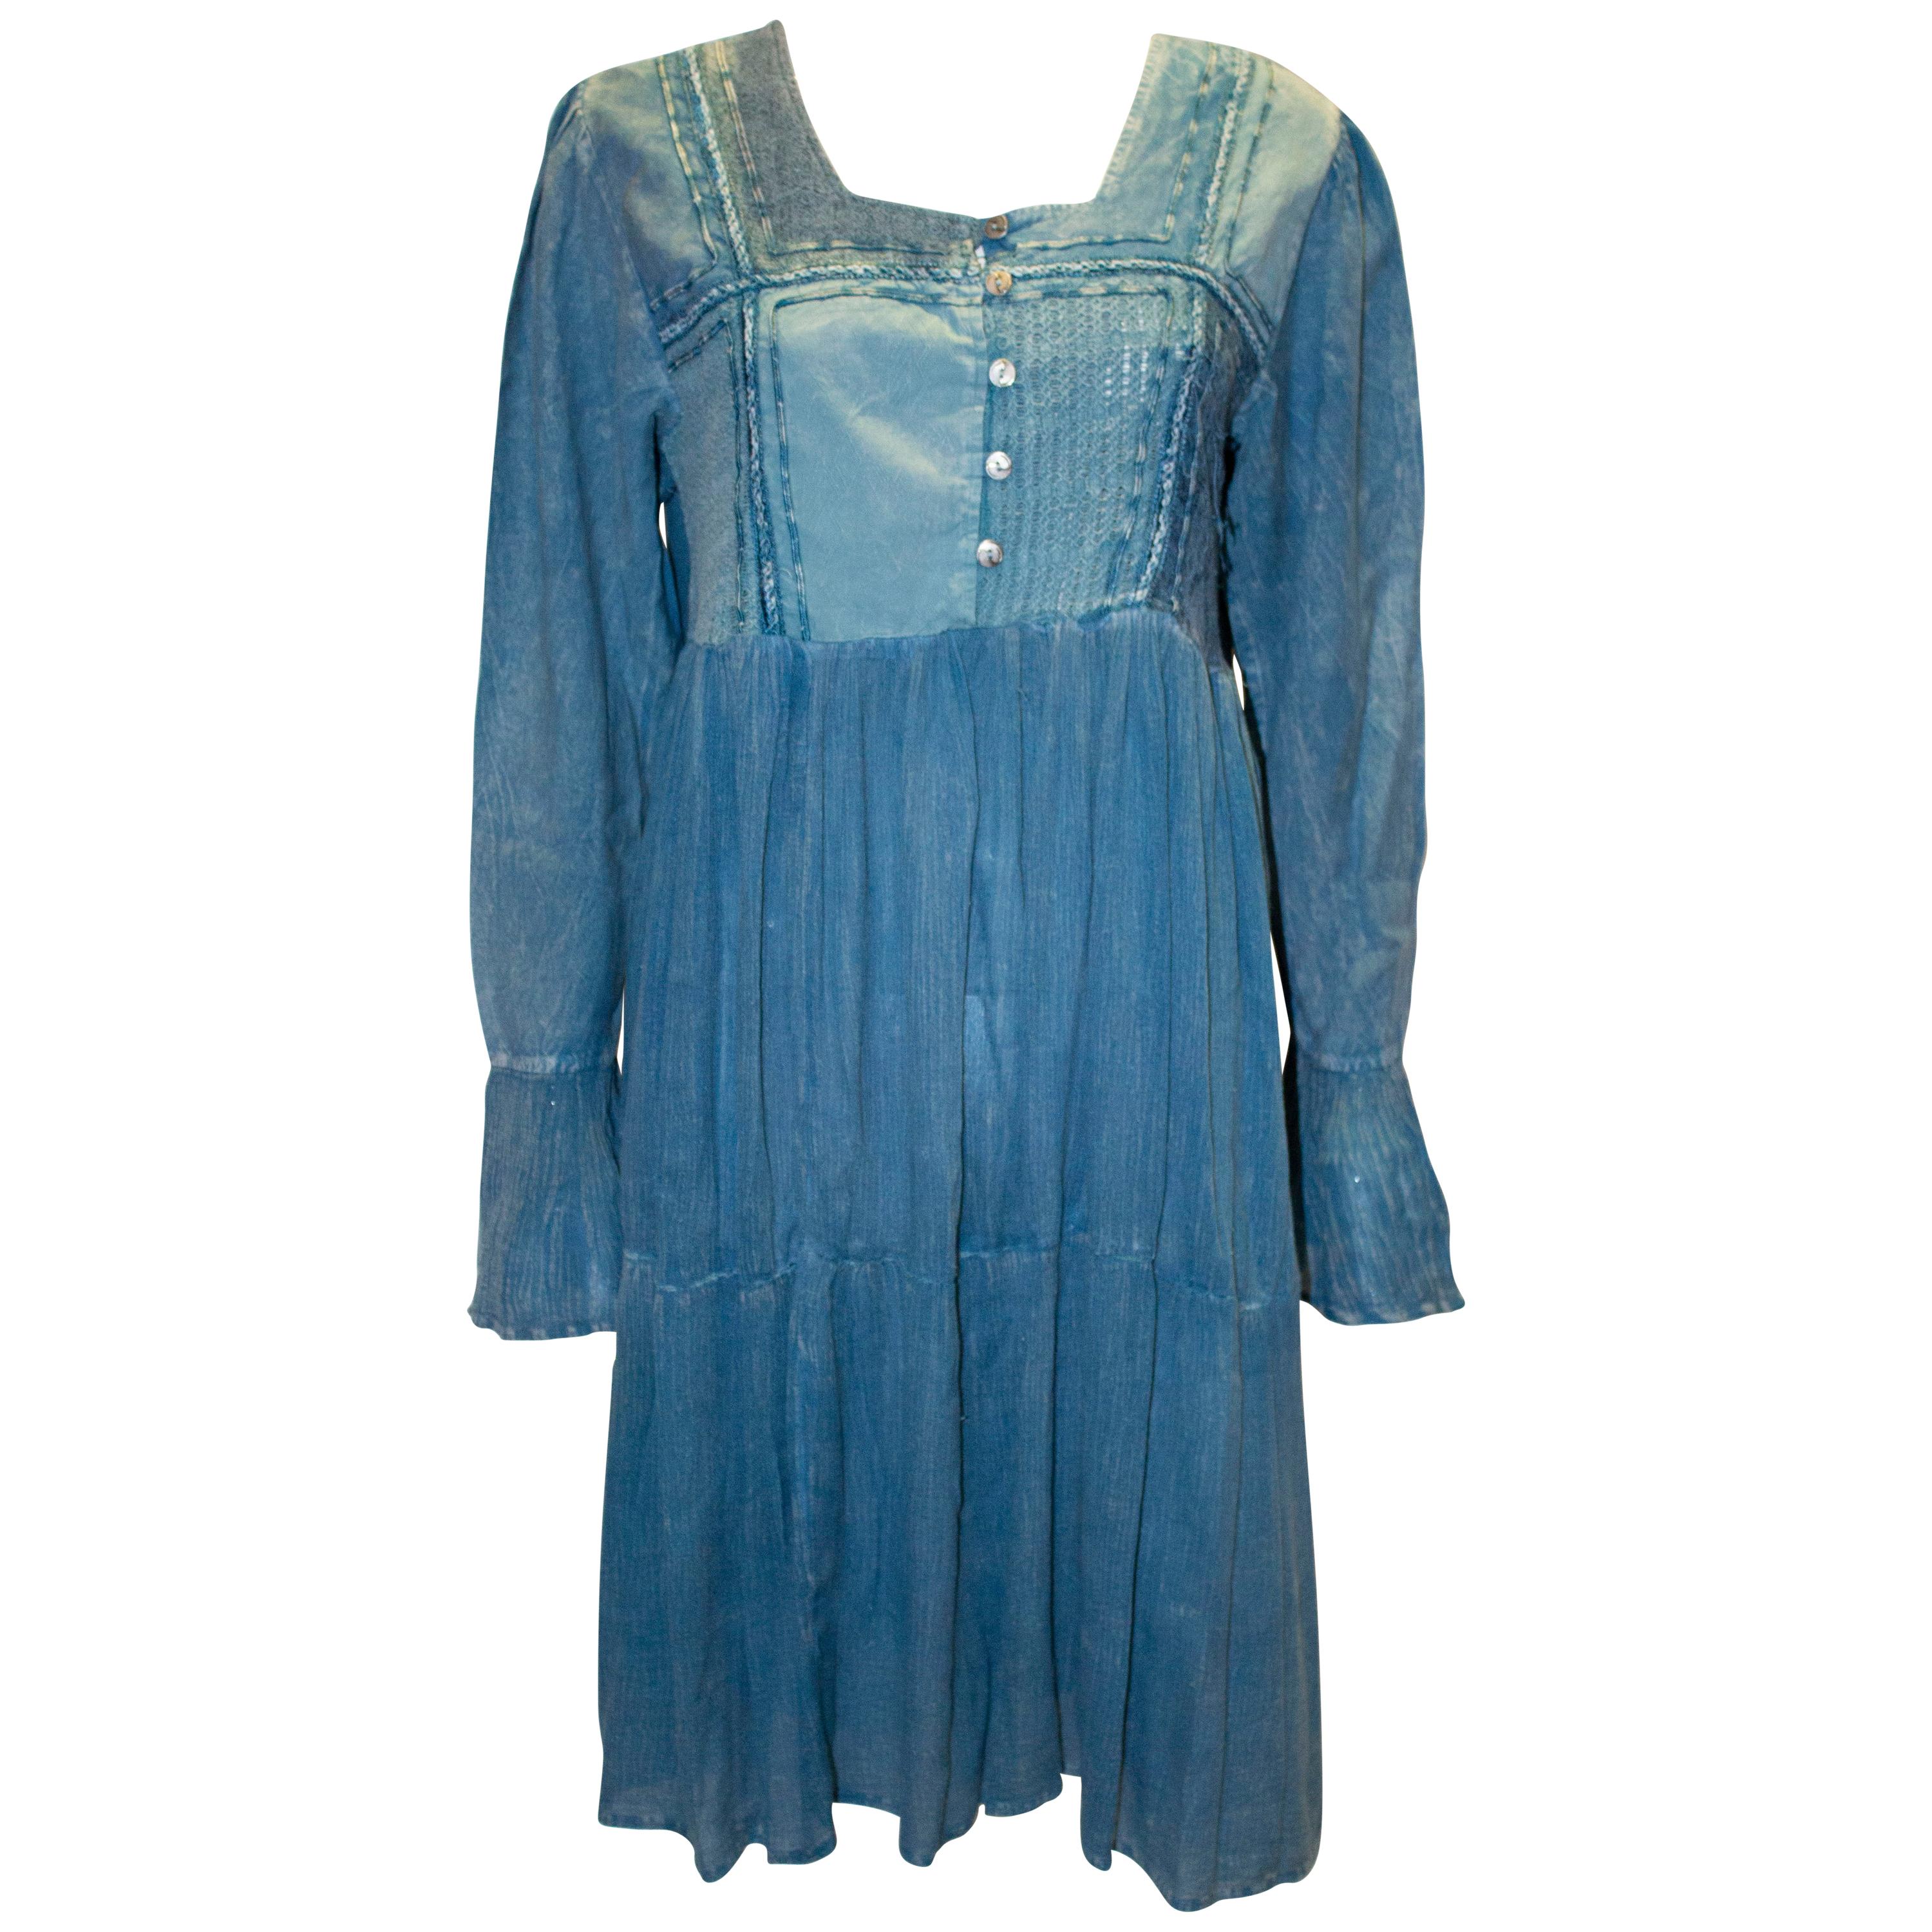 Vintage Blue Boho Top / Mini Dress For Sale